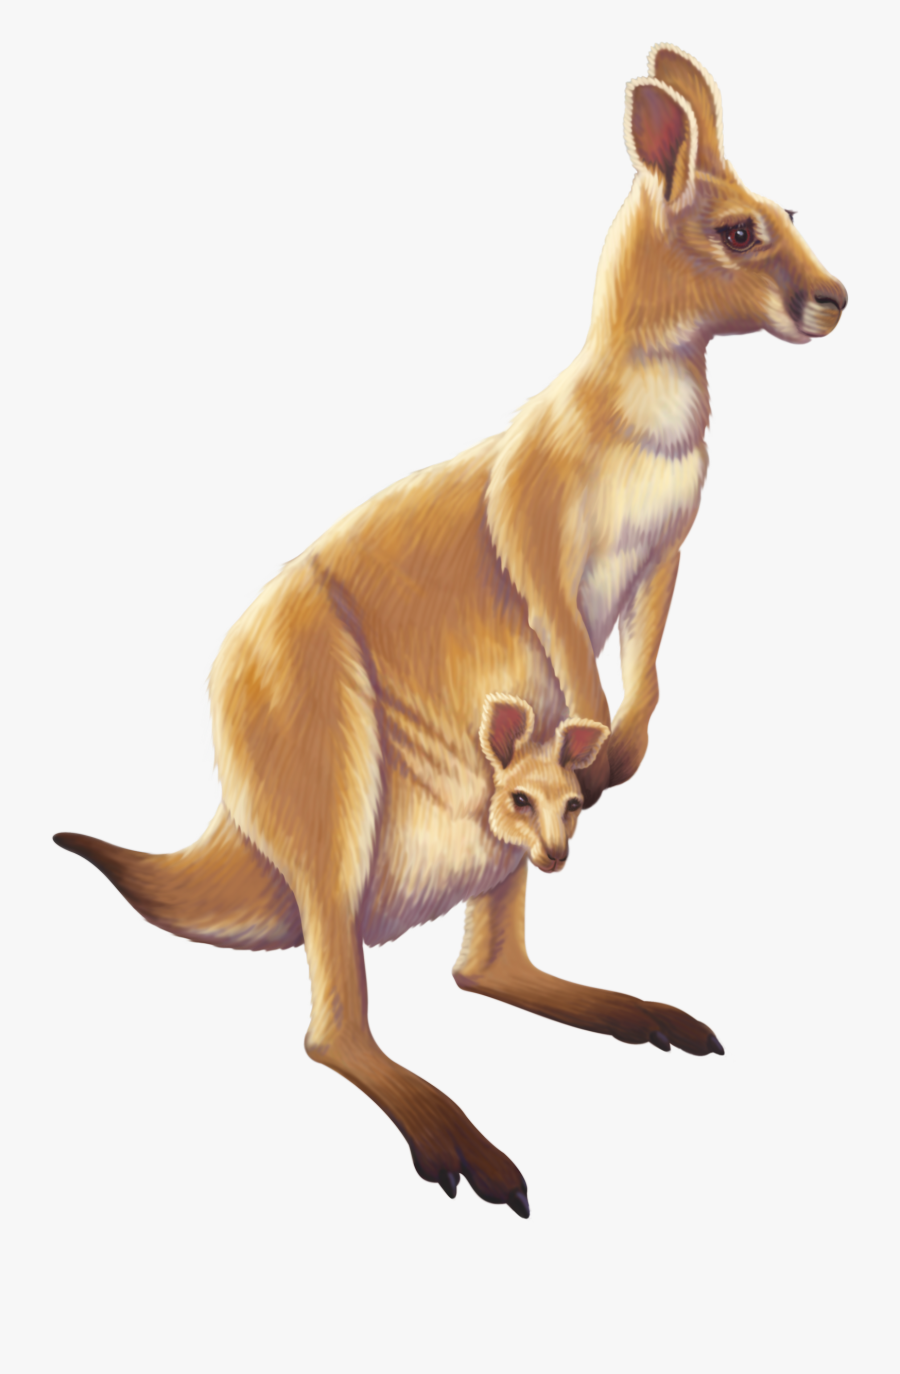 Kangaroo Australia Animal Free Transparent Image Hd - Small Kangaroo Pictures For A Cursor, Transparent Clipart